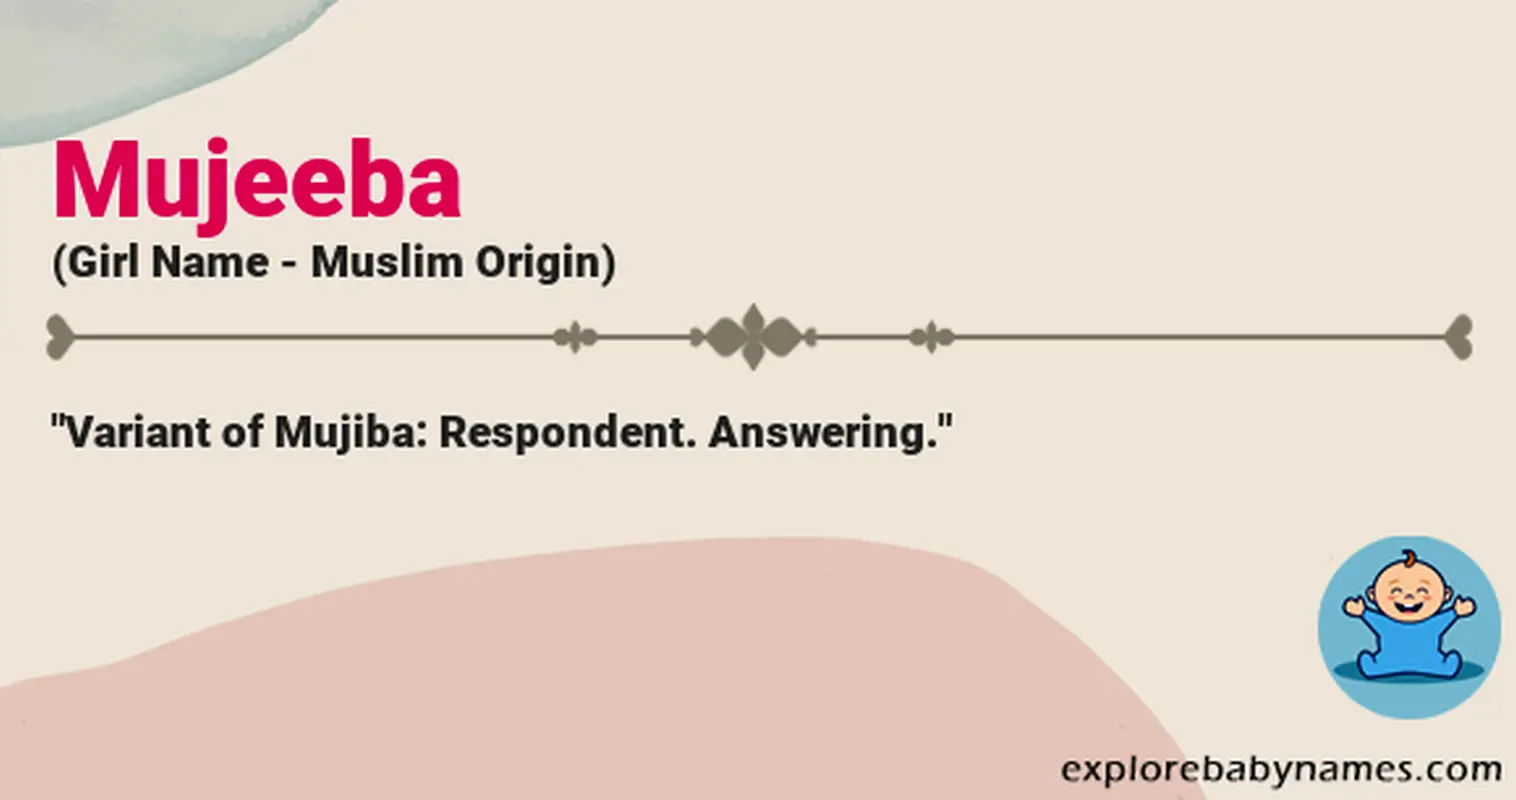 Meaning of Mujeeba